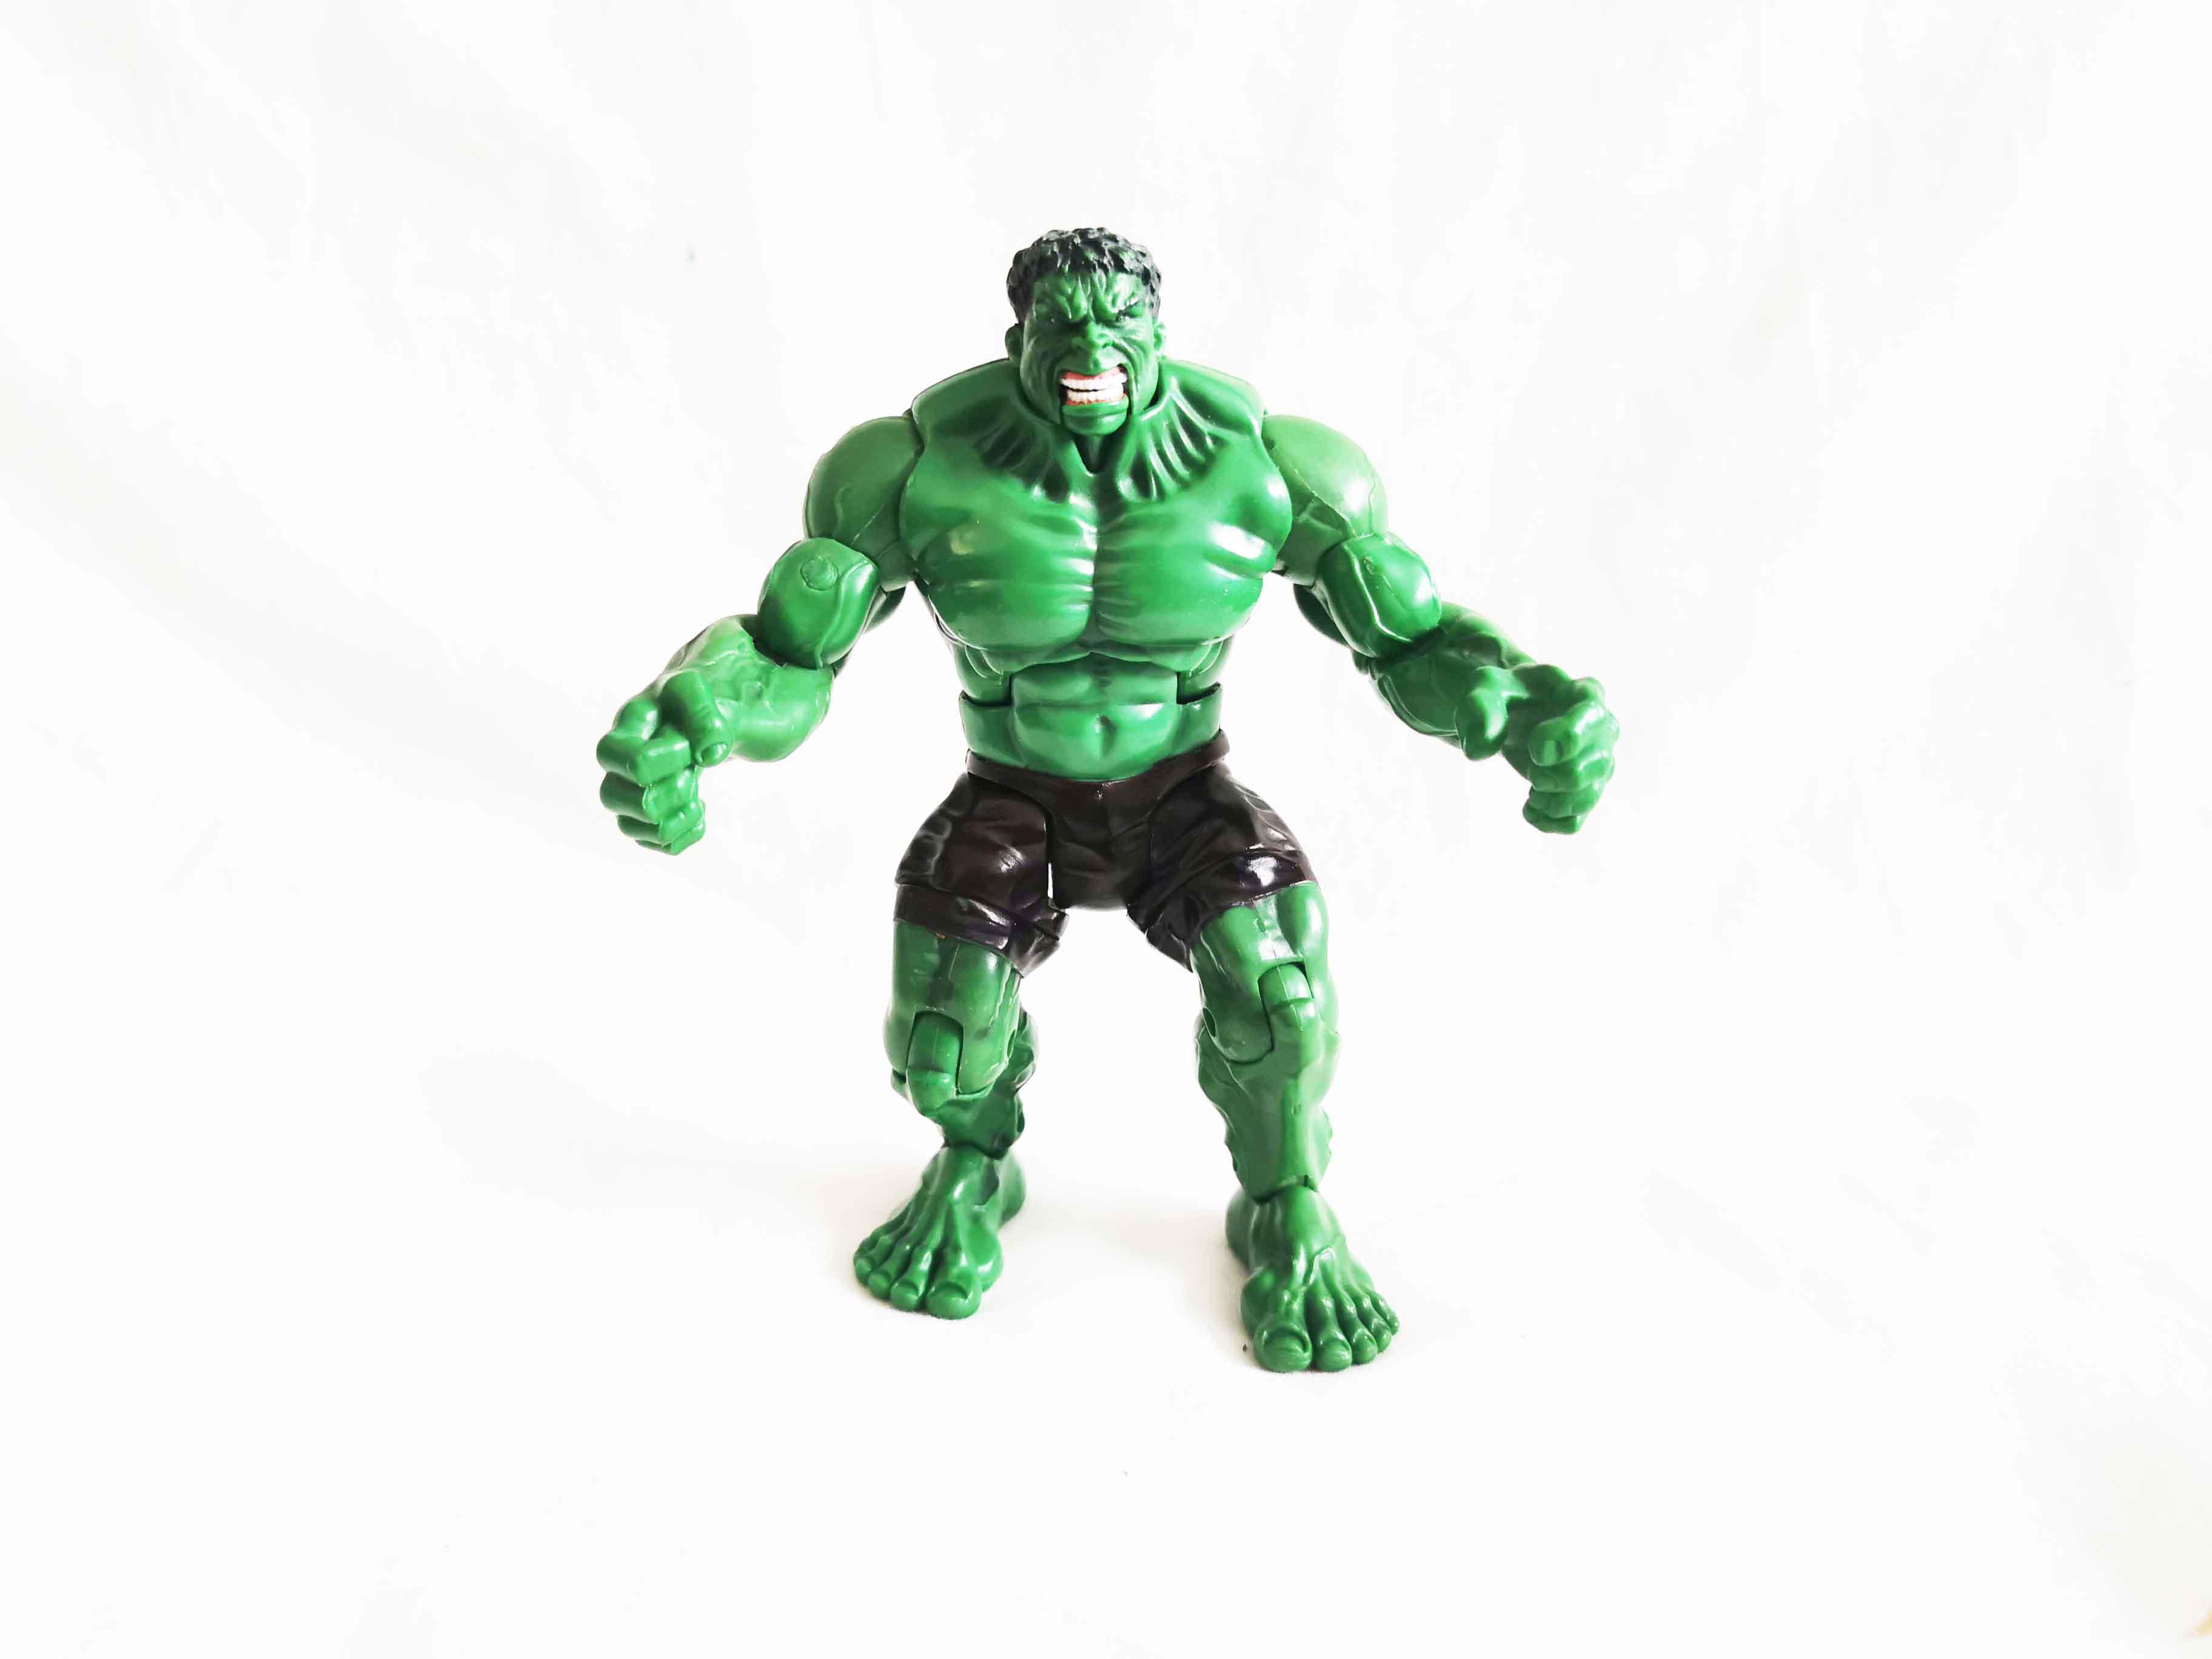 Incredible Hulk Statue Figure Toy 9”